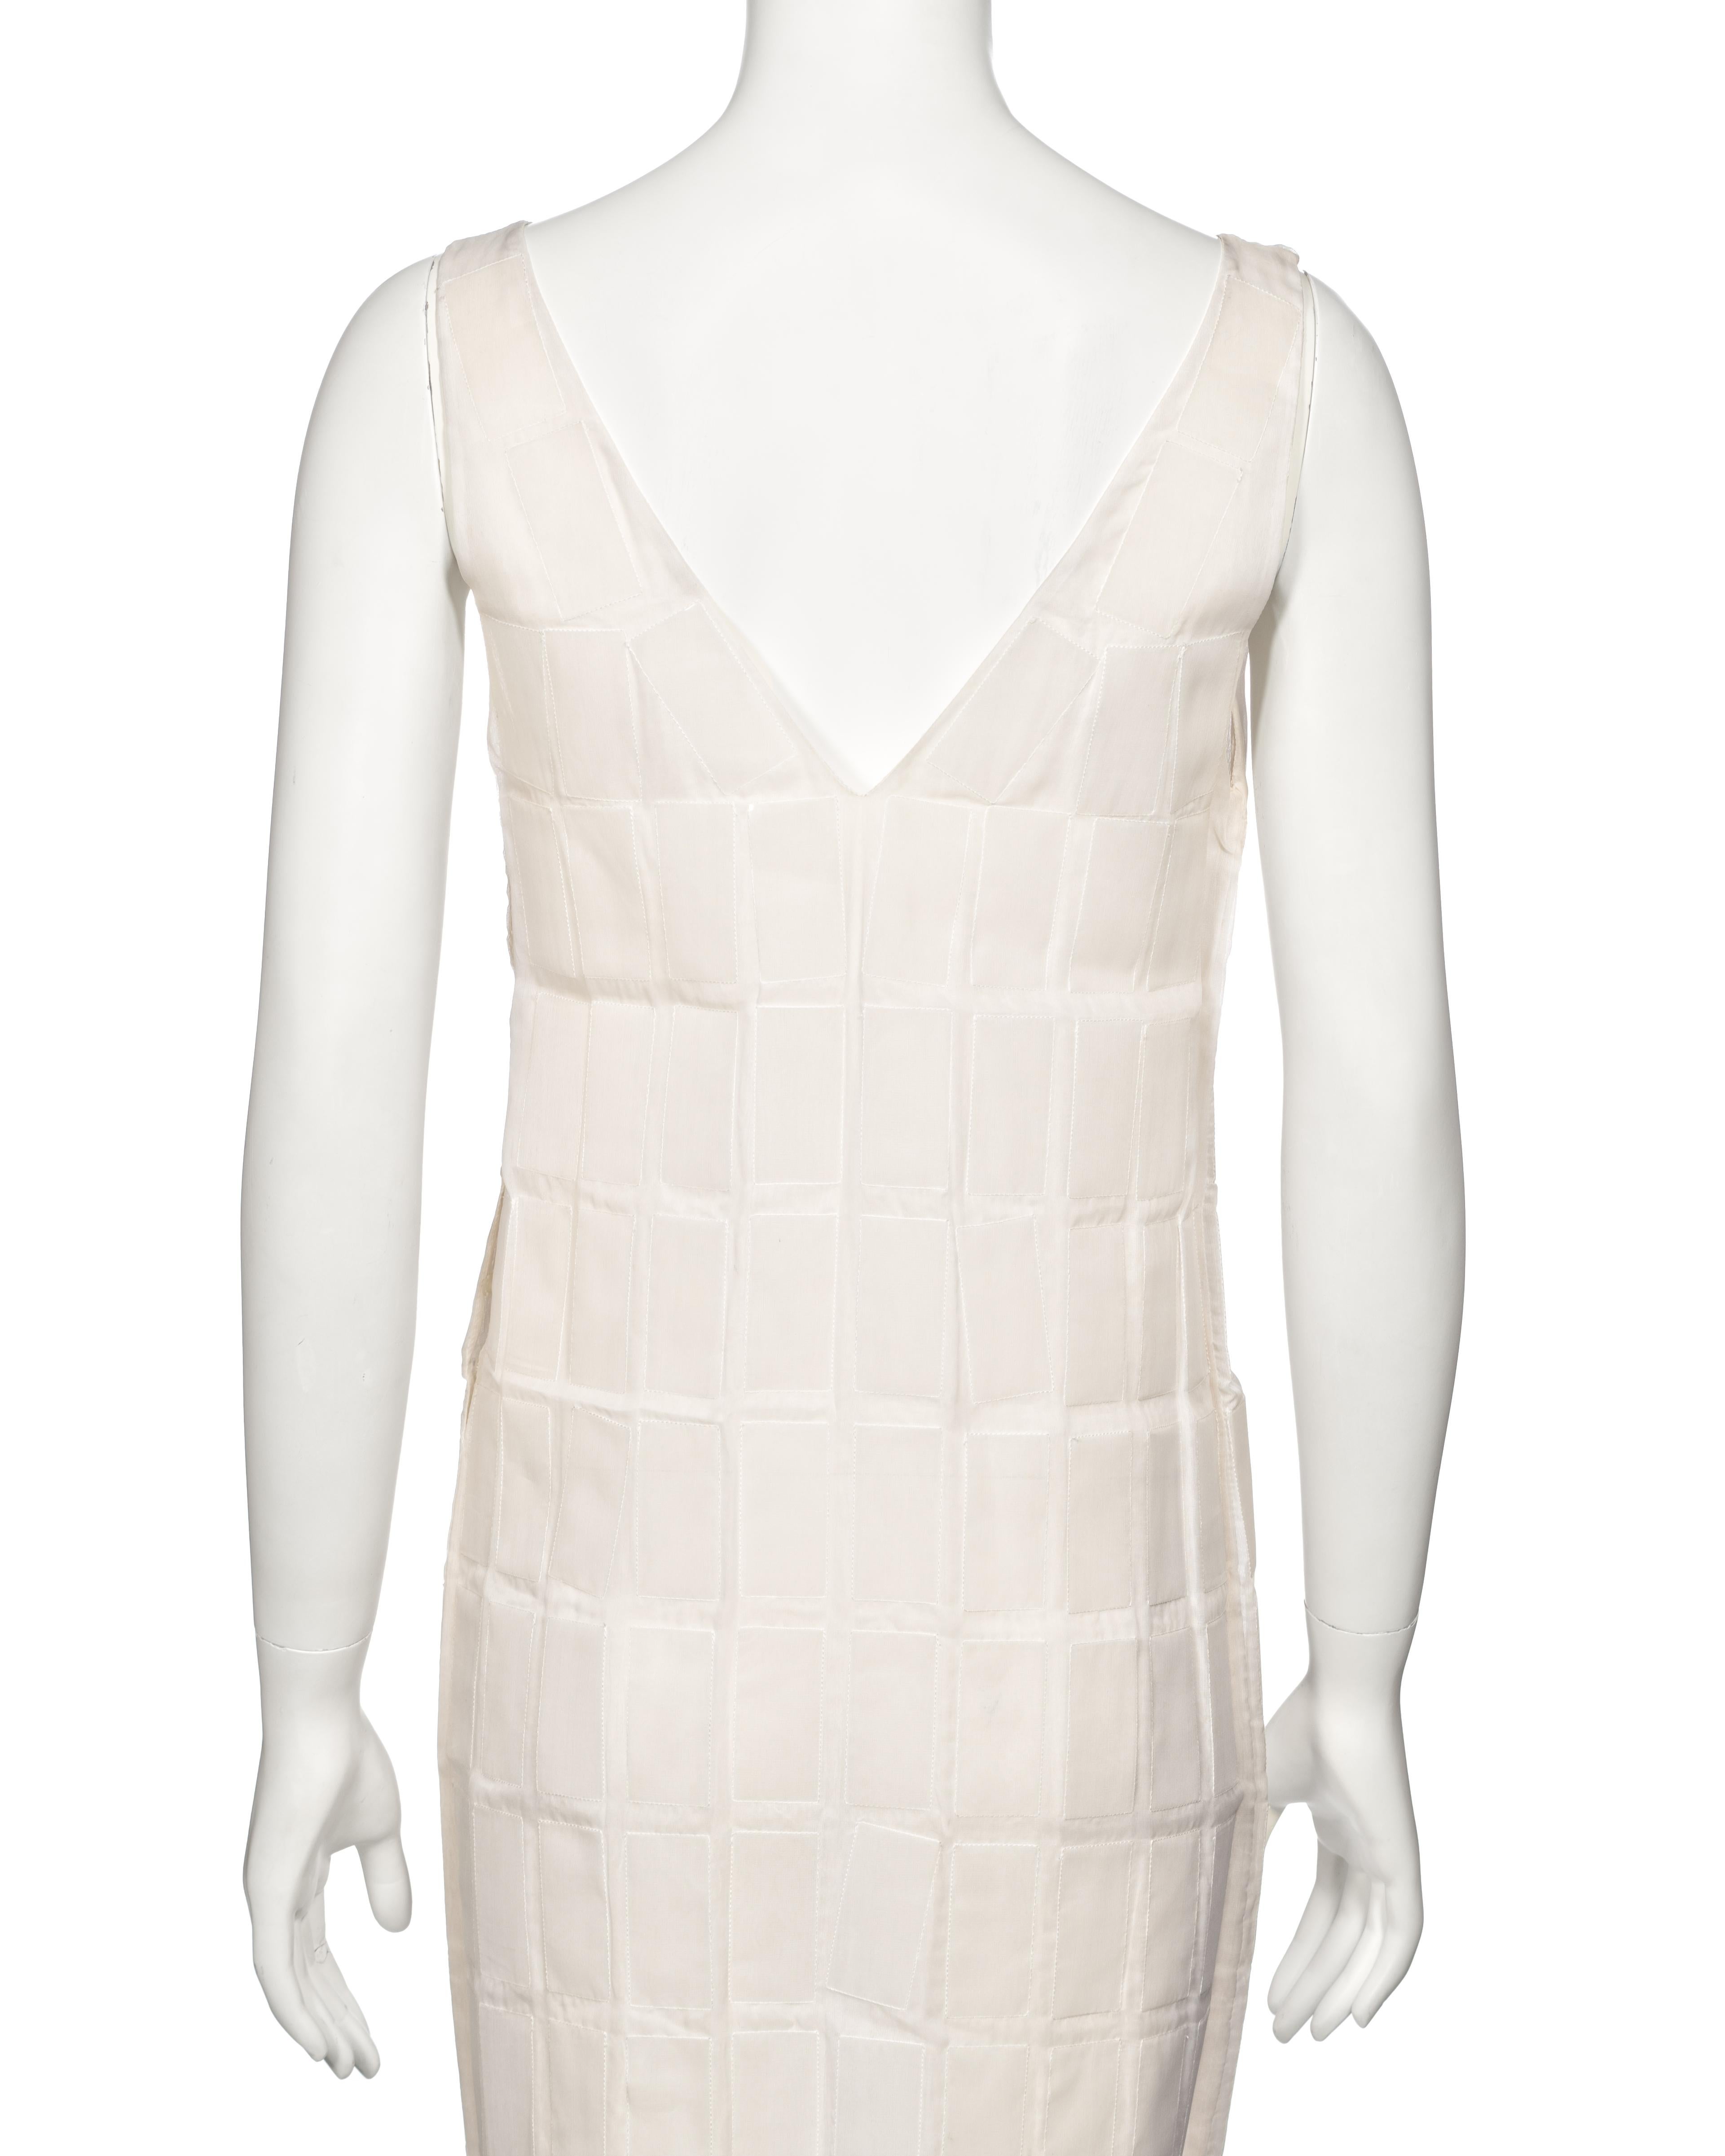 Prada by Miuccia Prada White Silk and Plastic Tile Shift Dress, fw 1998 For Sale 7